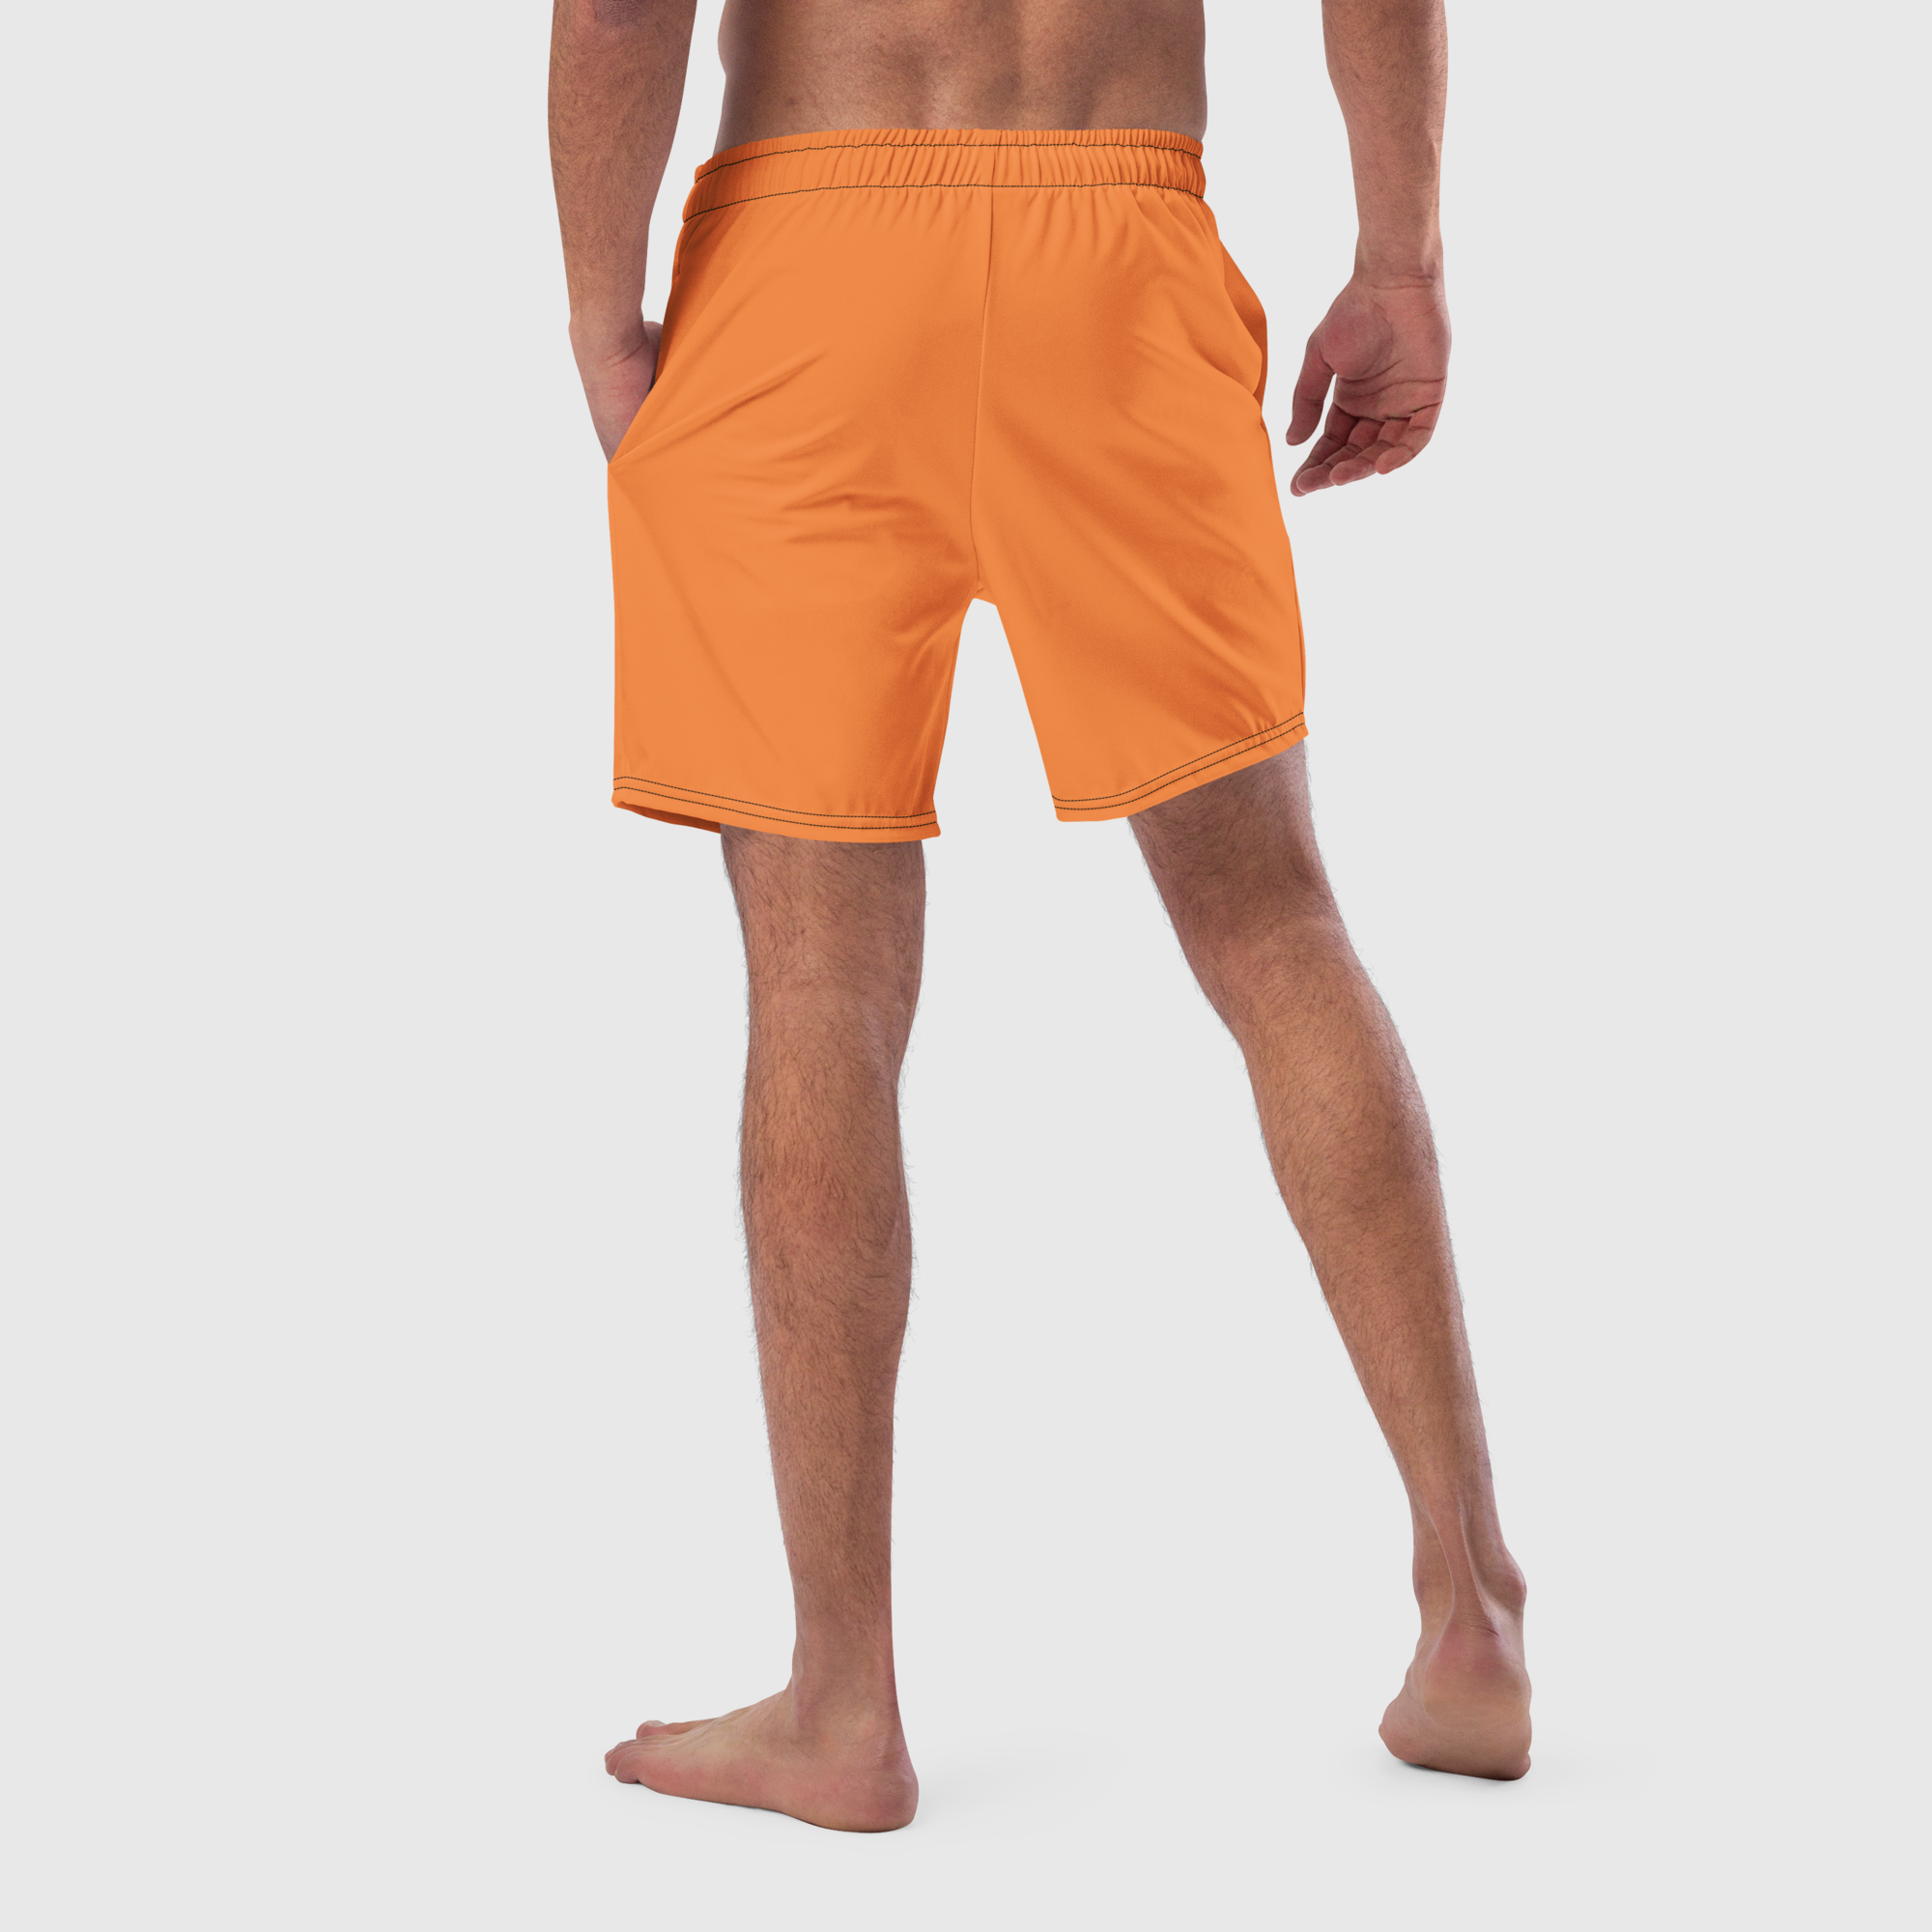 Men's swim trunks - Orange